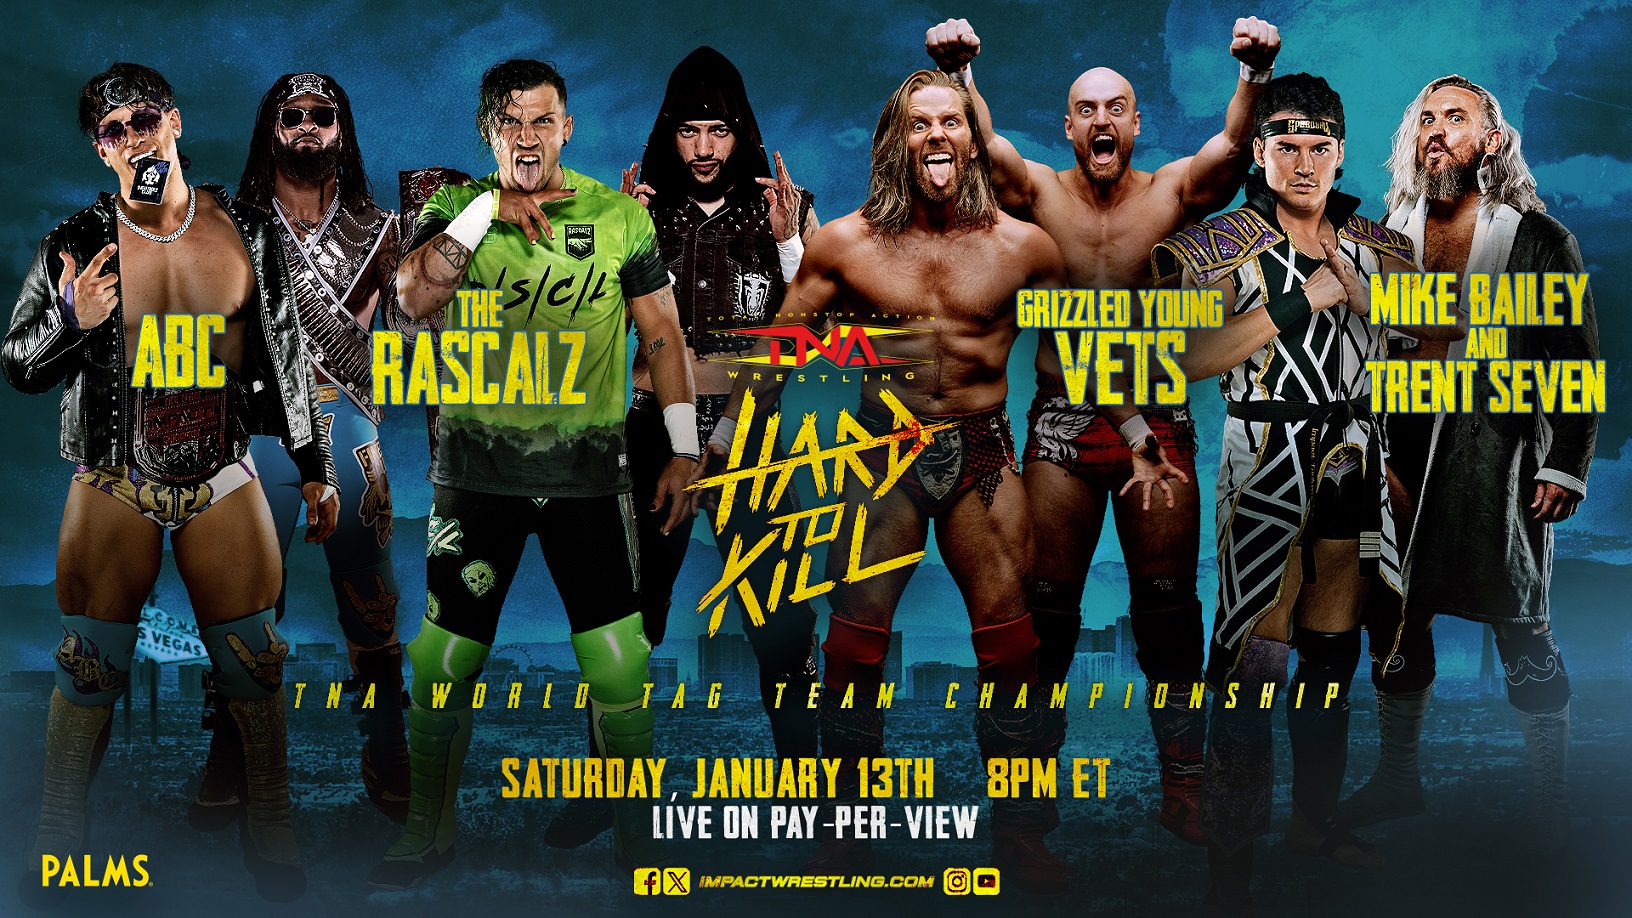 Santino Marella Makes Huge TNA World Tag Team Title Match for Hard To Kill – TNA Wrestling